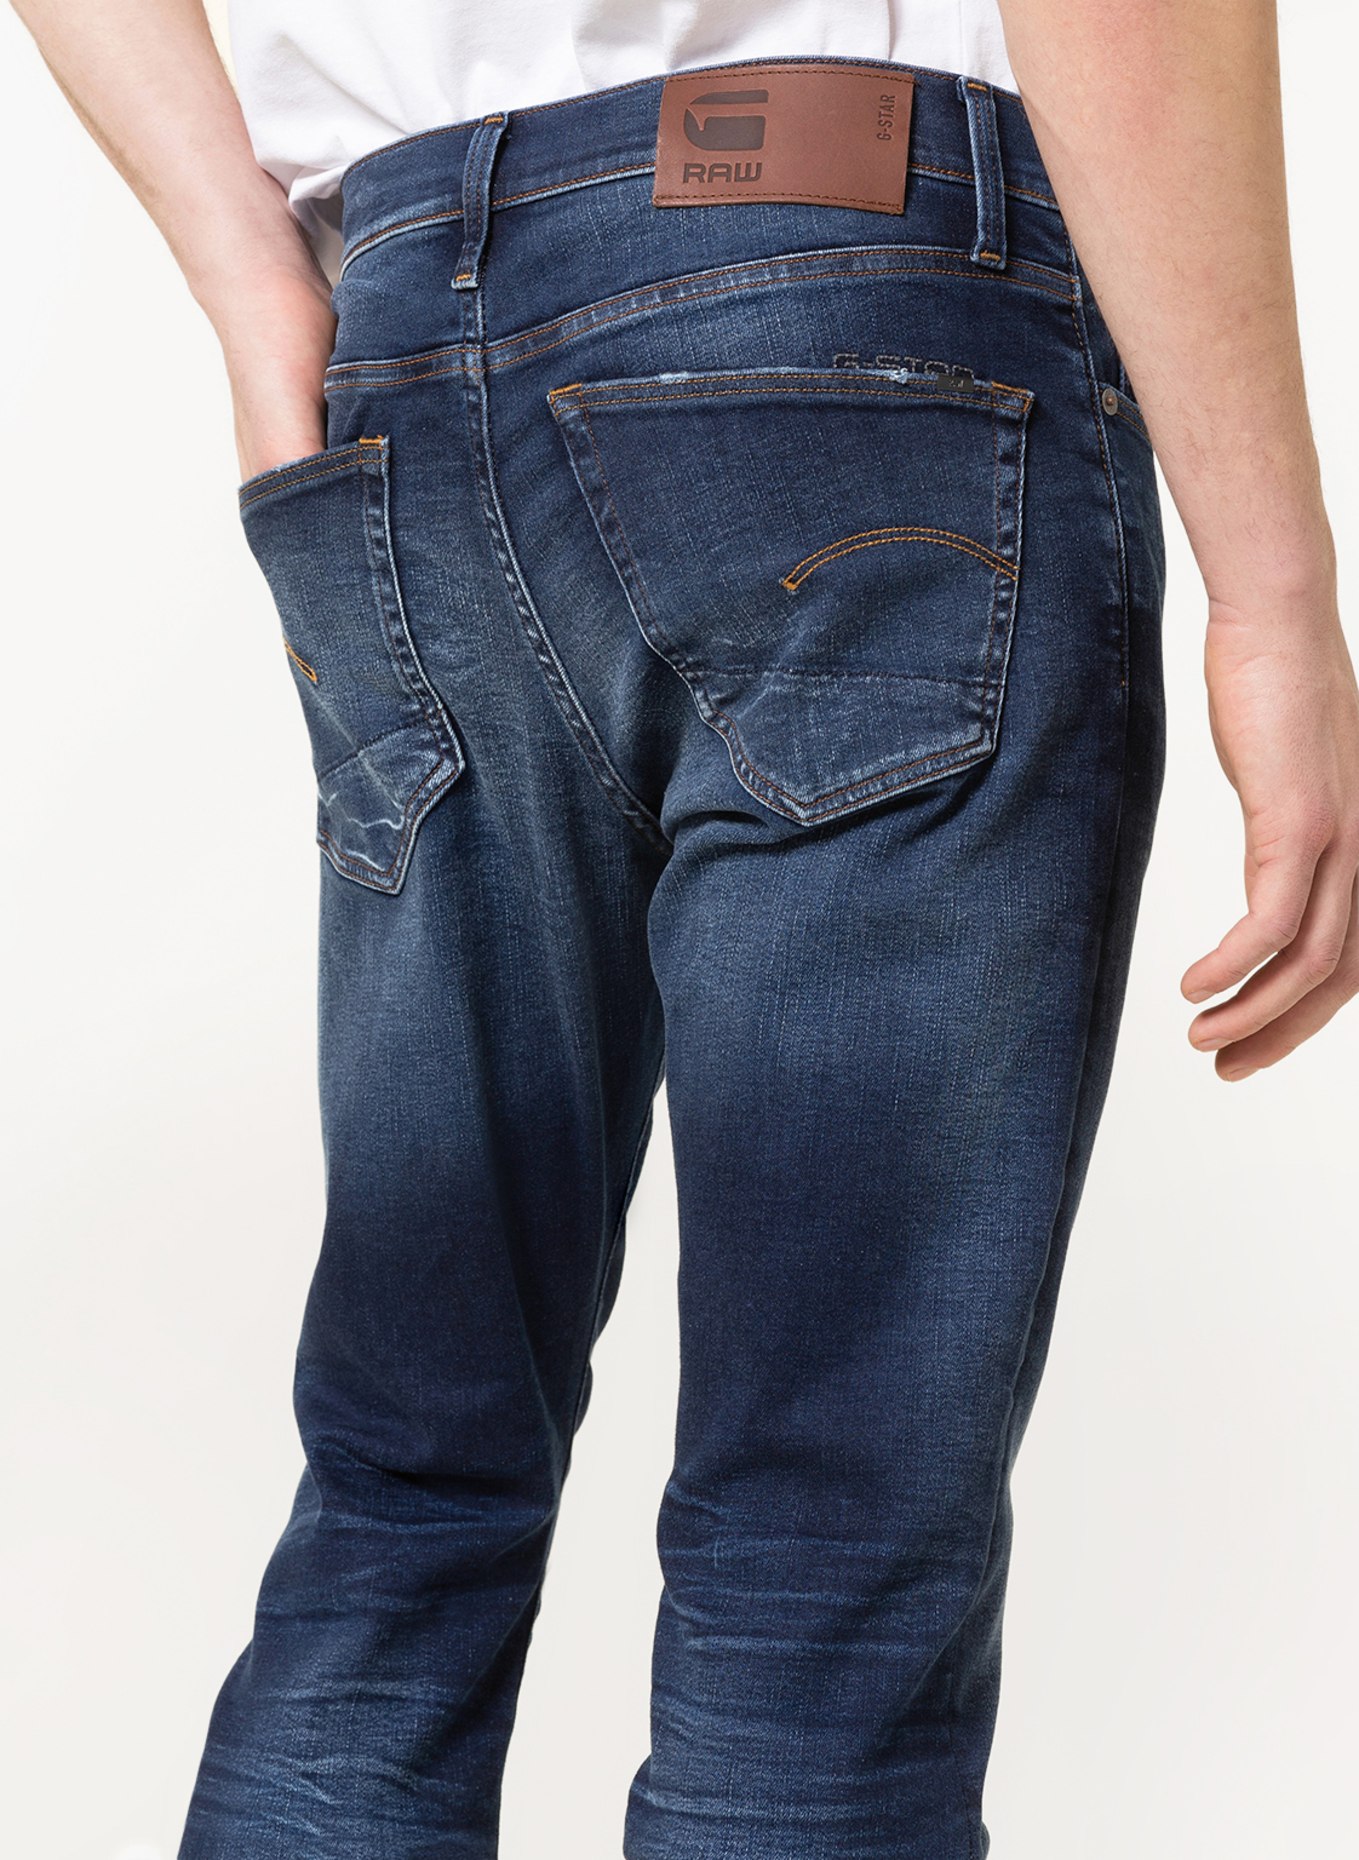 G-Star RAW Jeans 3301 Slim Fit, Farbe: B843 worn in dusk blue (Bild 5)